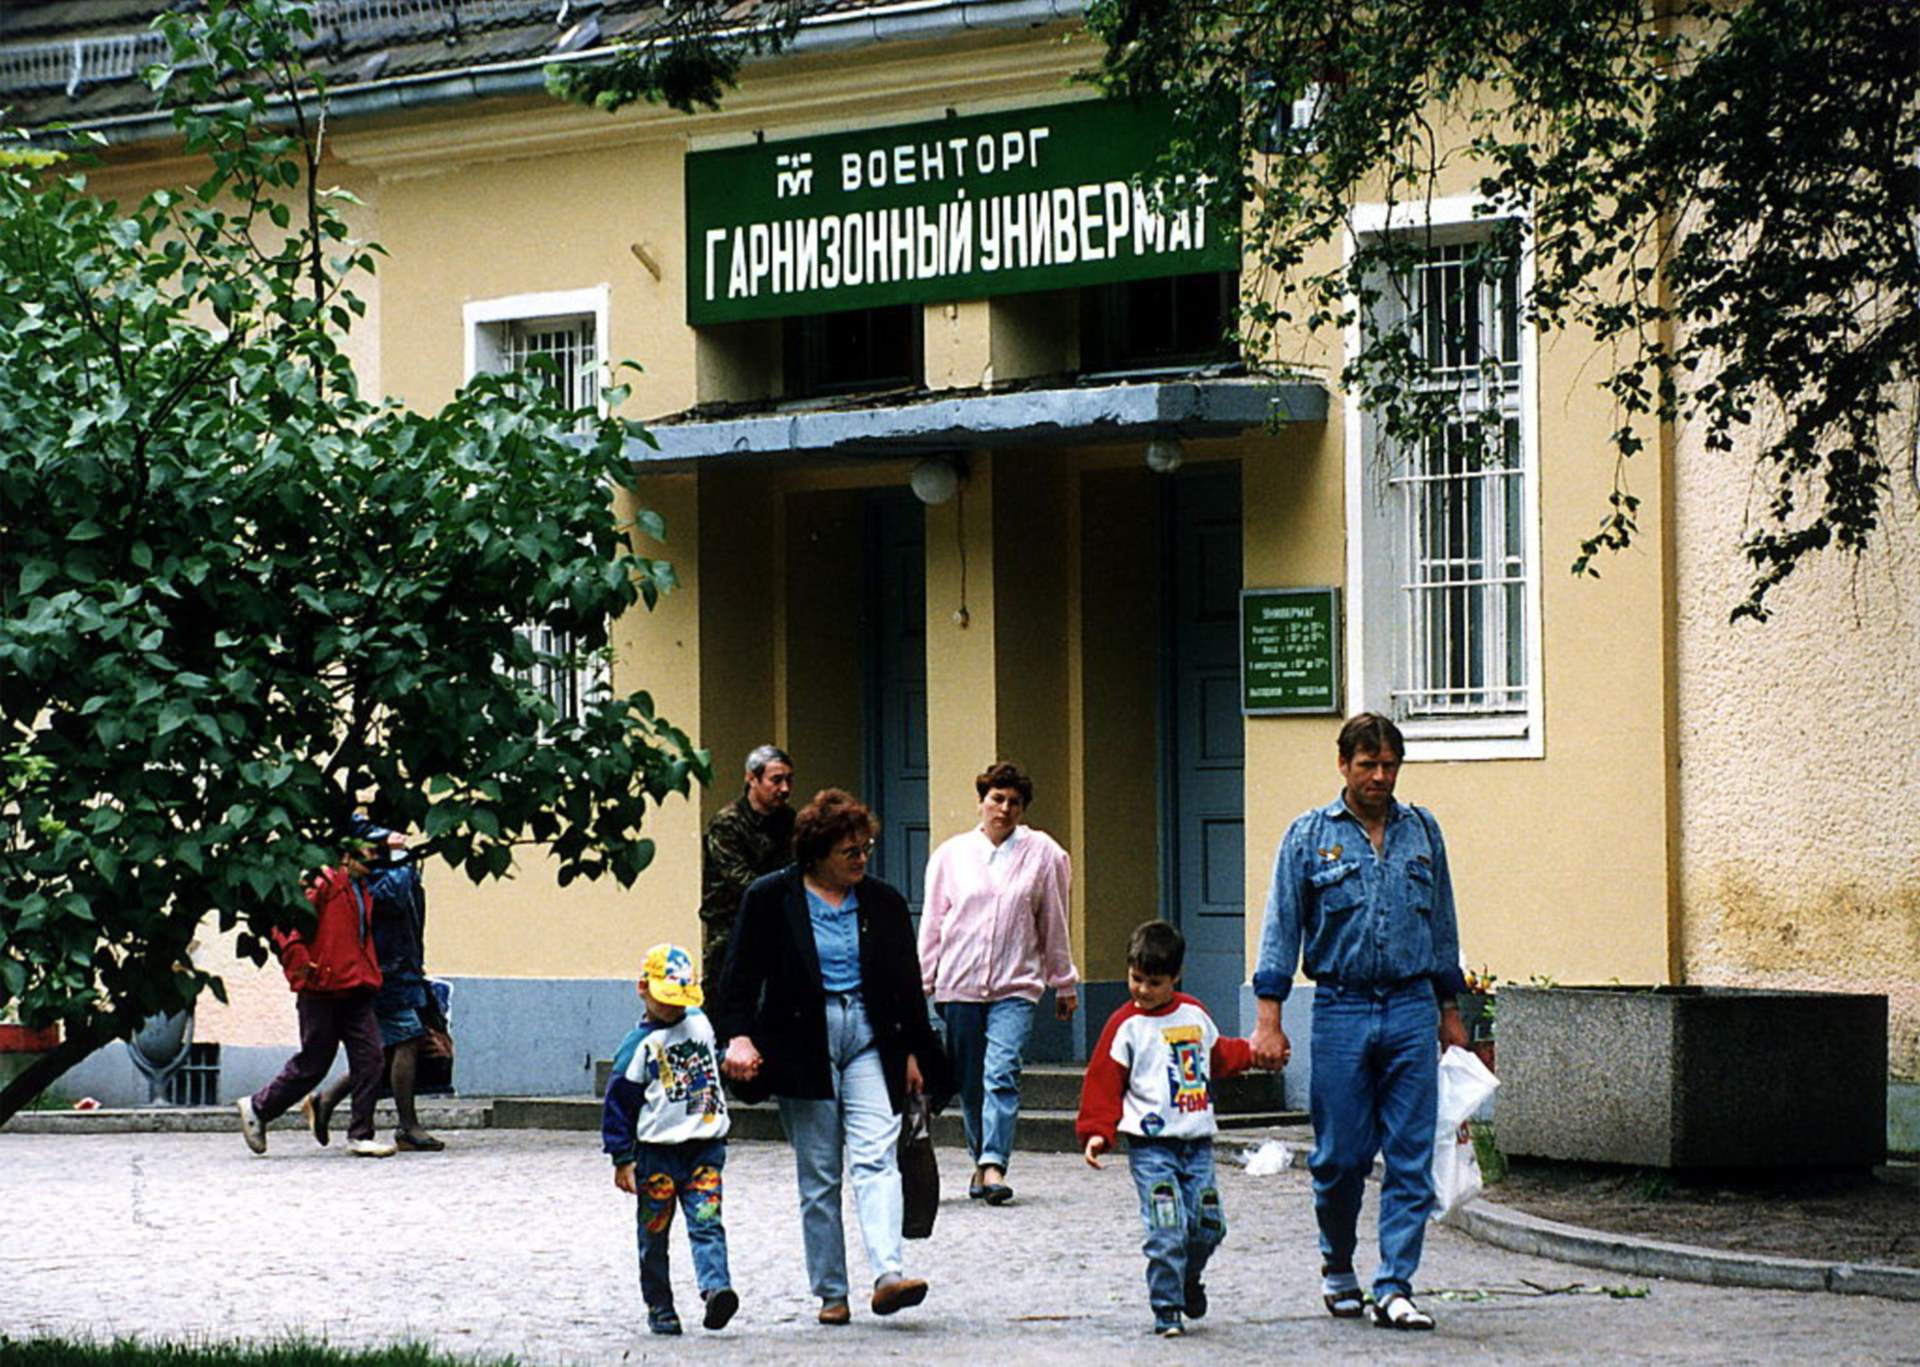 Wünsdorf, base soviética abandonada en Alemania  4034543F00000578-0-image-a-98_1494516033591